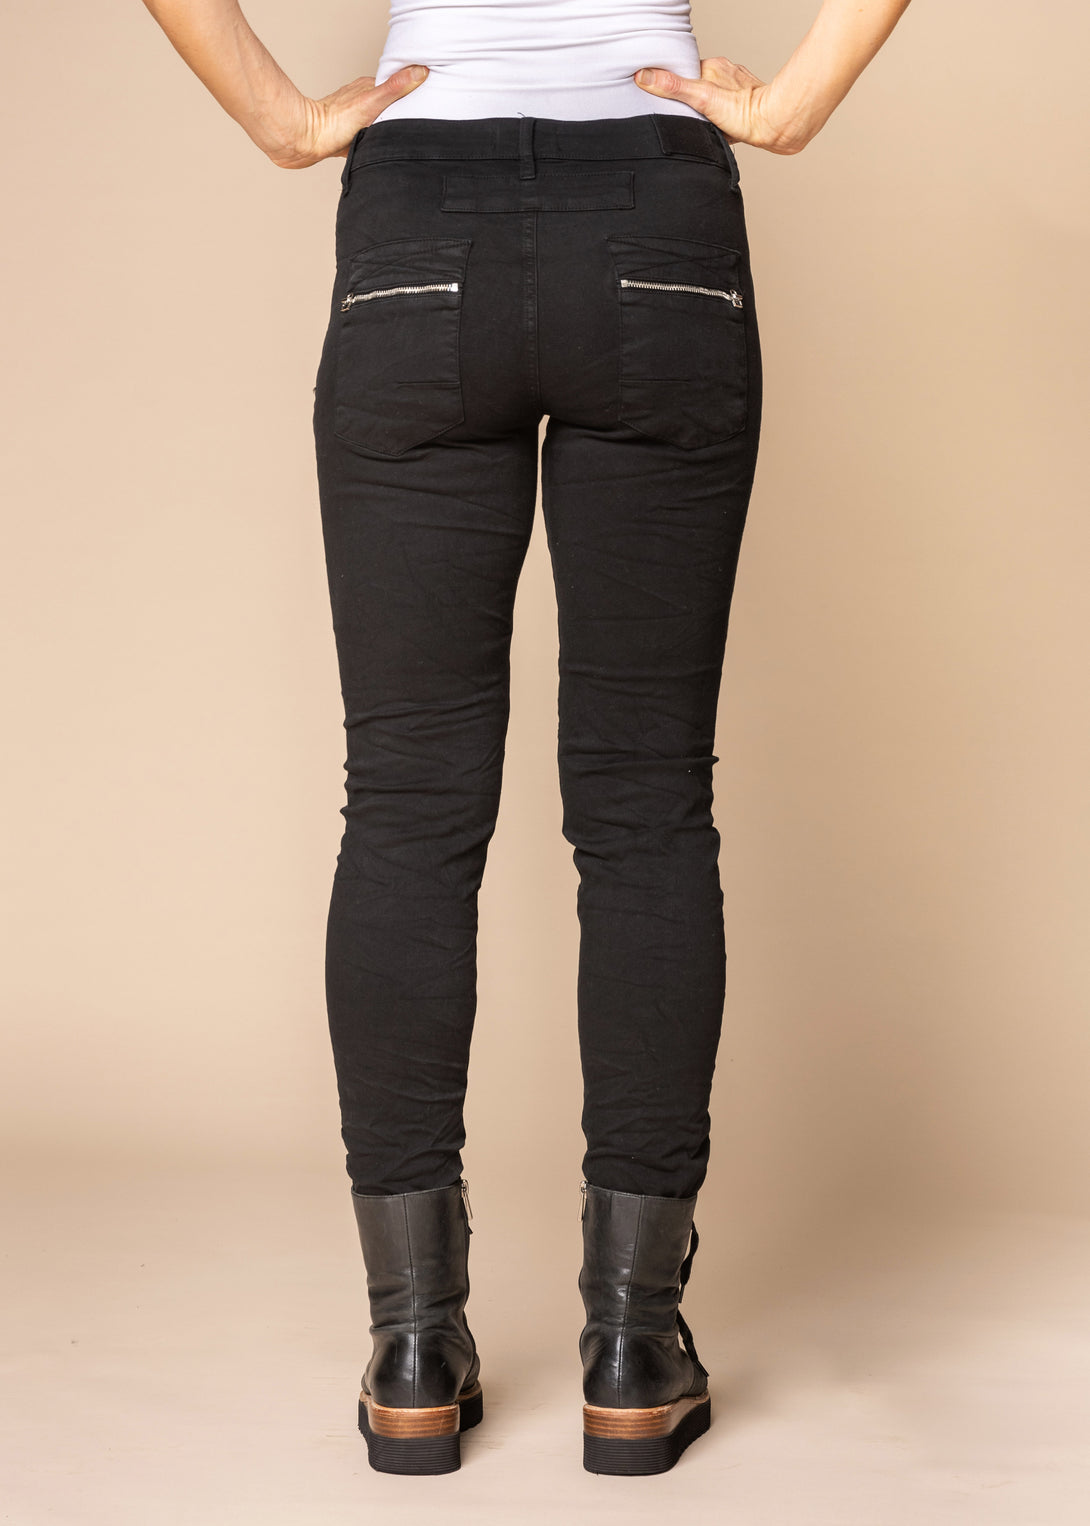 Nessie Pants in Onyx - Imagine Fashion